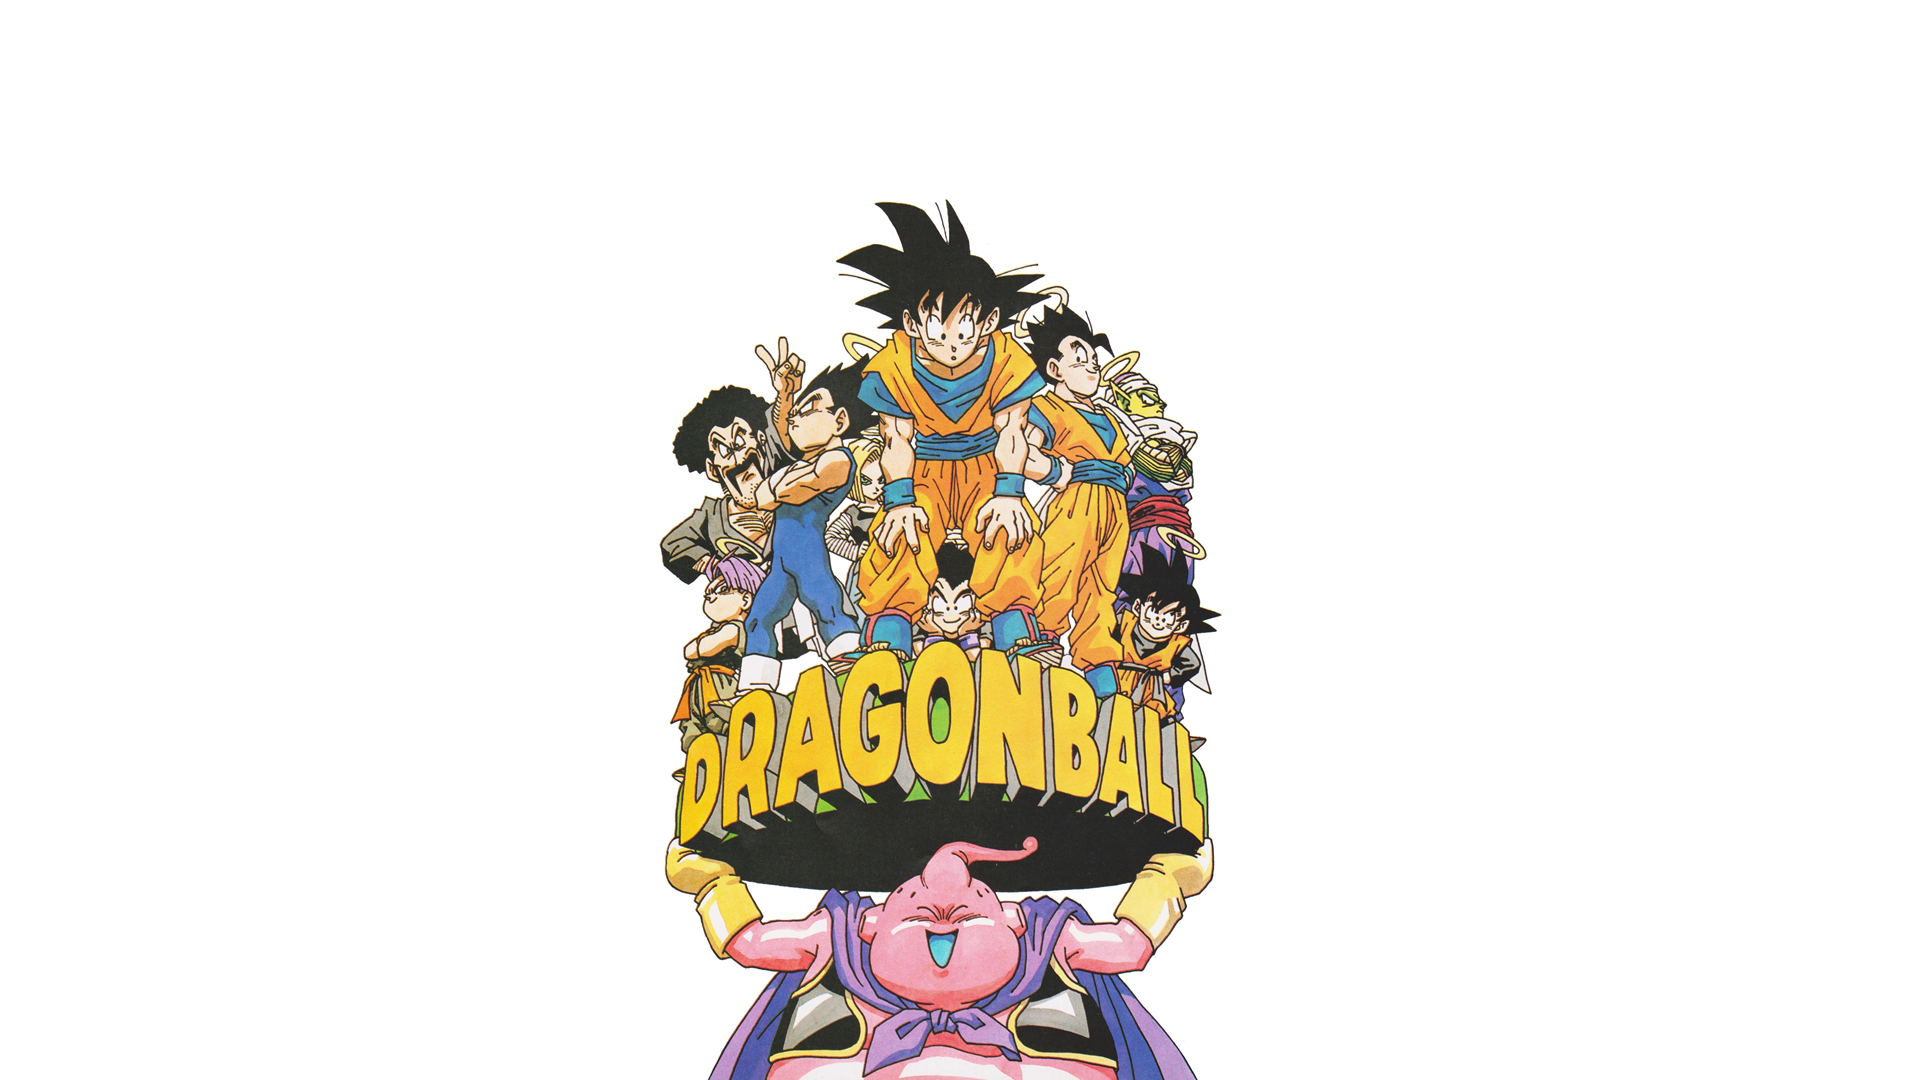 Anime 1920x1080 Dragon Ball Dragon Ball Z Son Goku Vegeta Piccolo Son Goten Trunks (Dragon ball) Majin Buu Krillin Android 18 Hercule simple background artwork Gohan white background minimalism